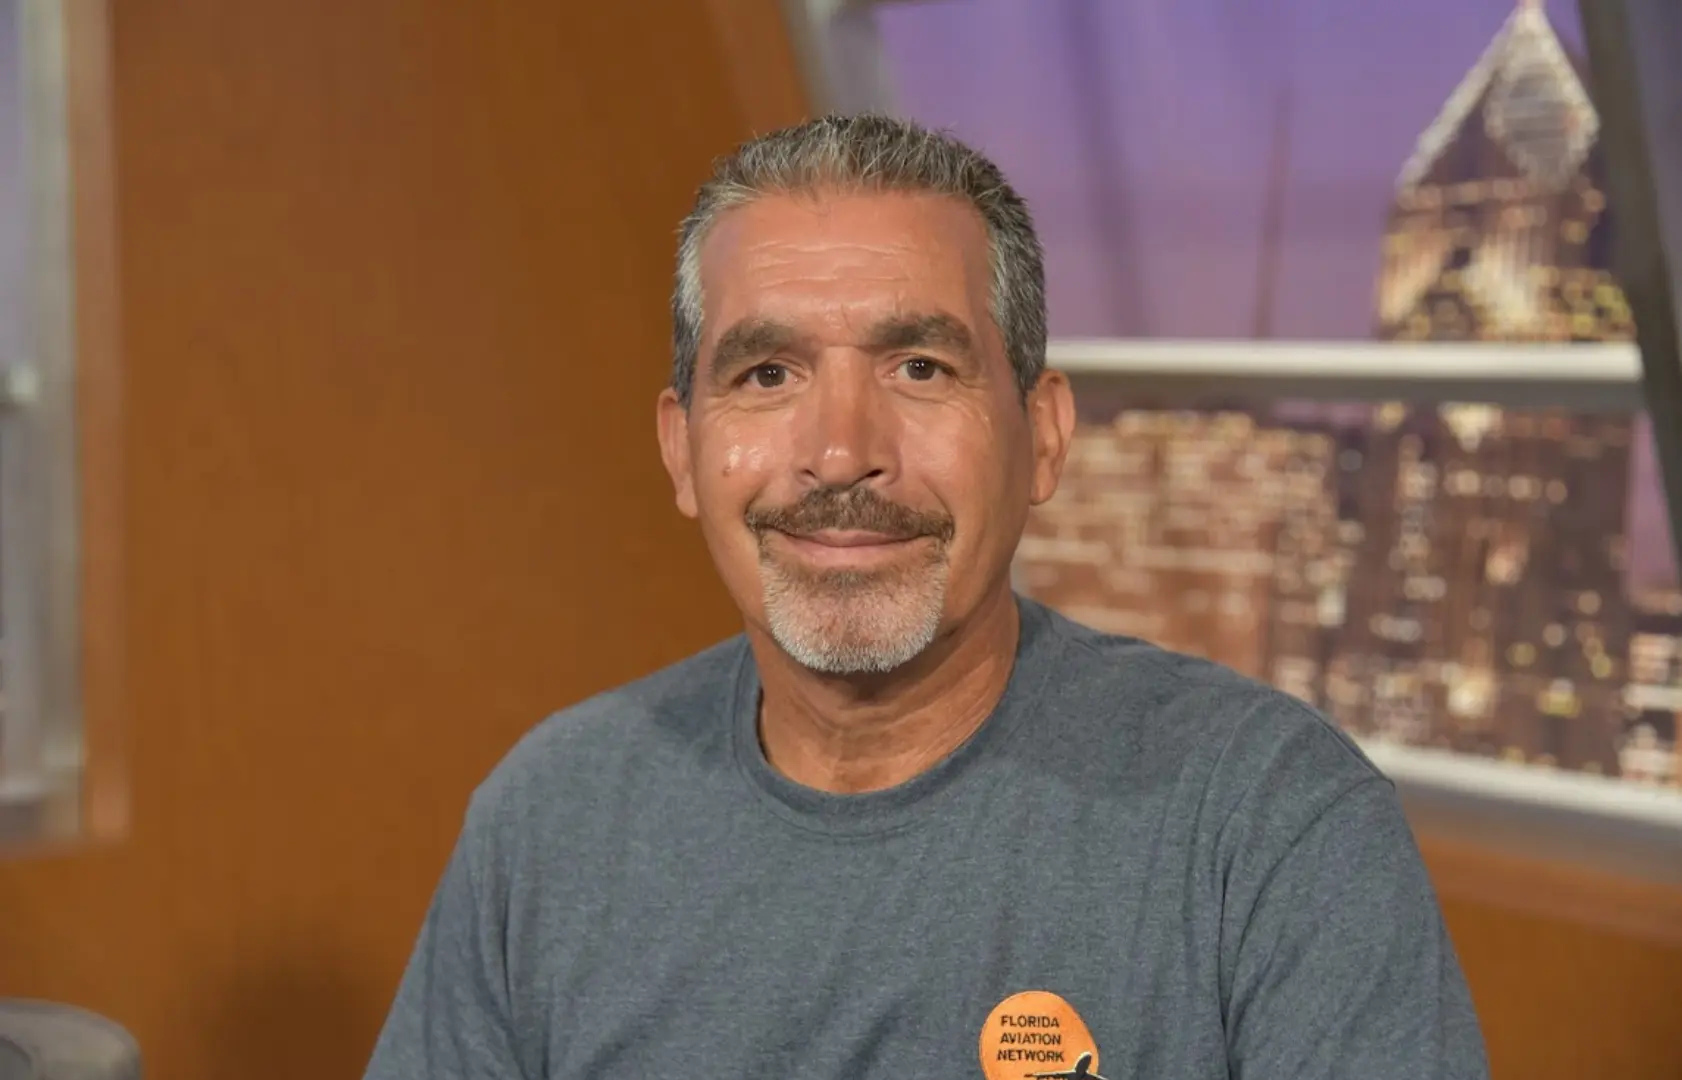 An elder man wearing a gray tshirt smiling